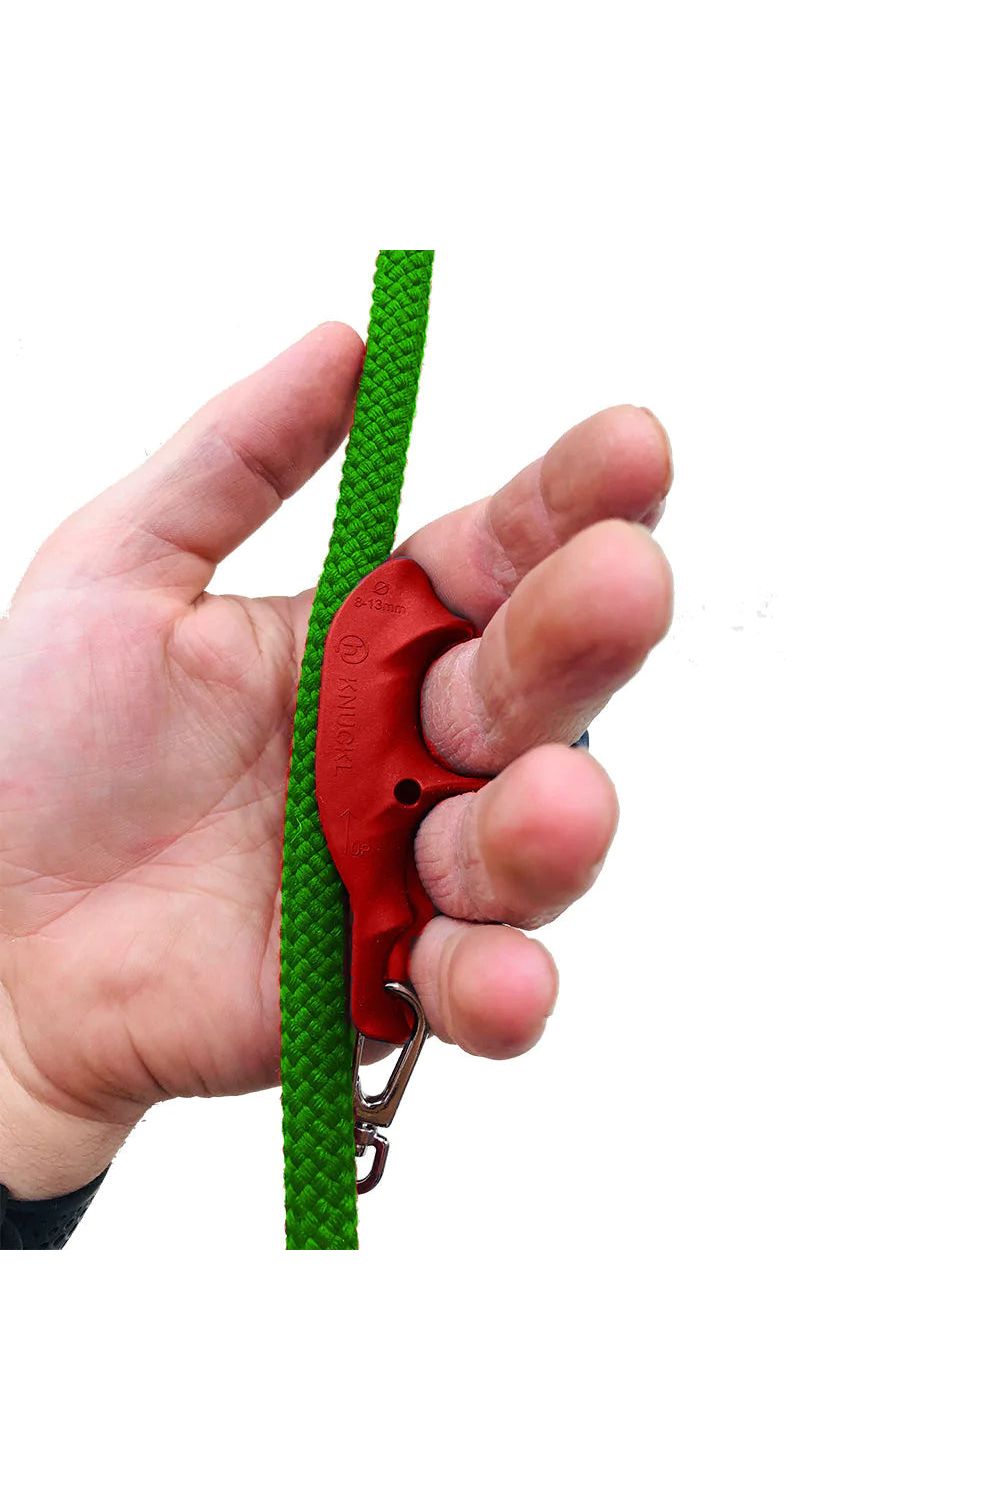 Knuckl Rope Gripper - taugriper med elastisk snor - Anton's Timber